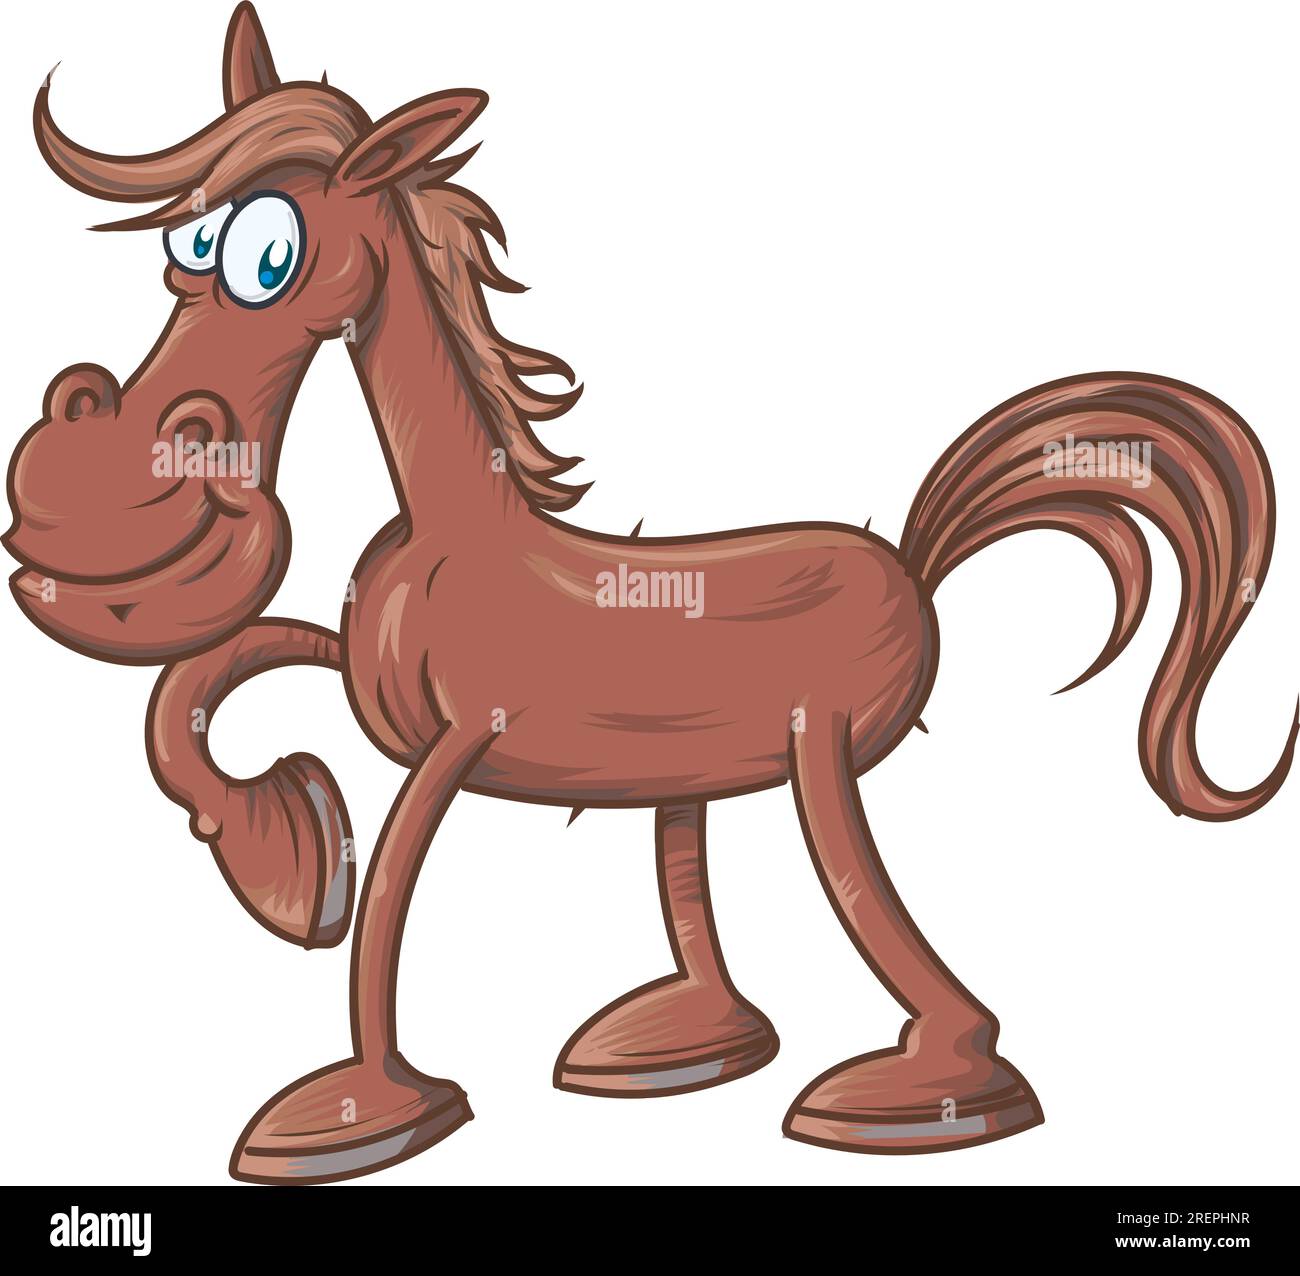 Galloping Cartoon Horse. vector illustration Stock Vector